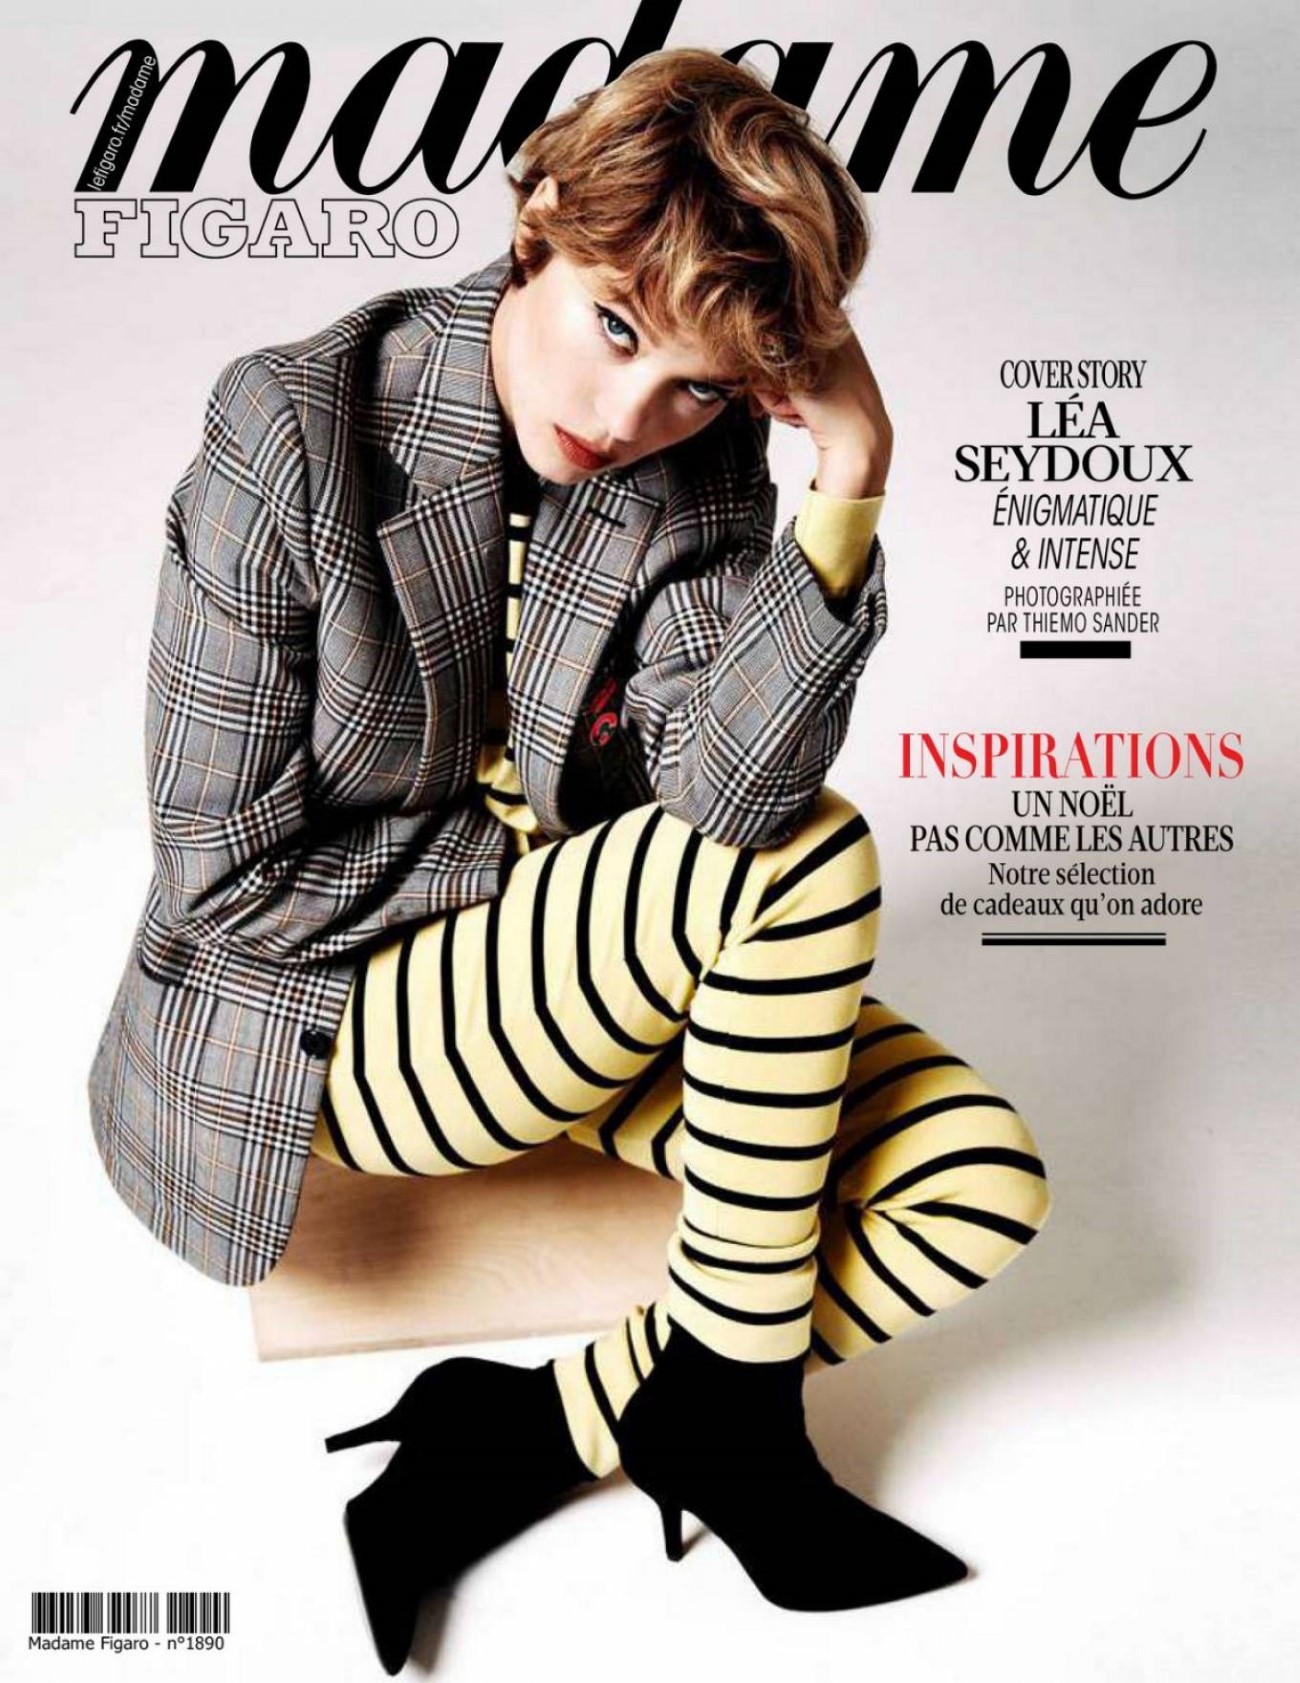 Léa Seydoux covers Madame Figaro November 13th, 2020 by Thiemo Sander